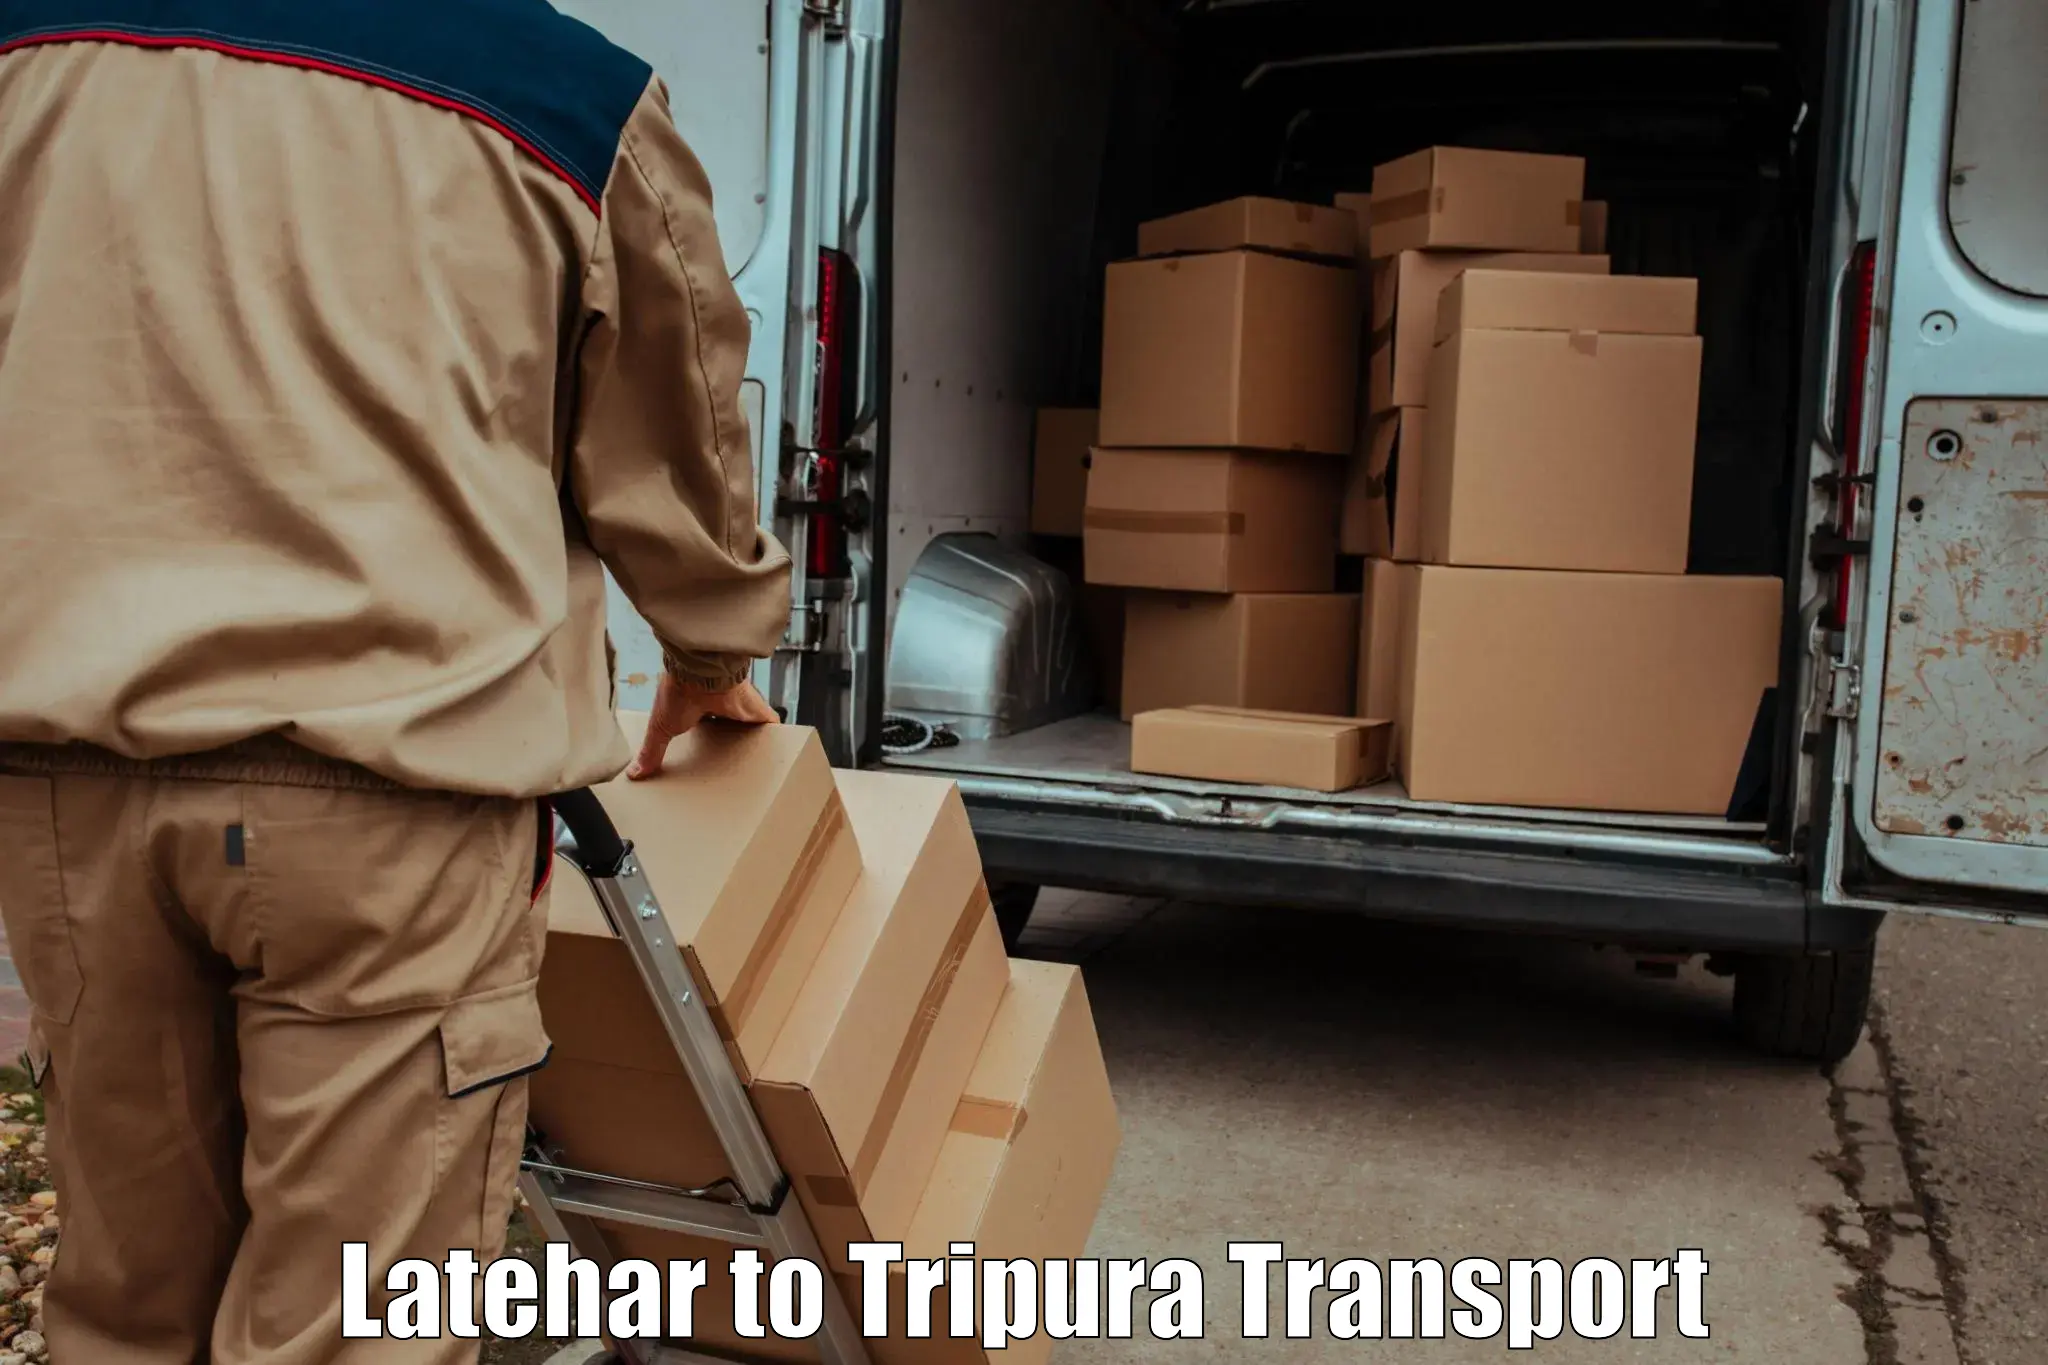 Express transport services Latehar to Udaipur Tripura